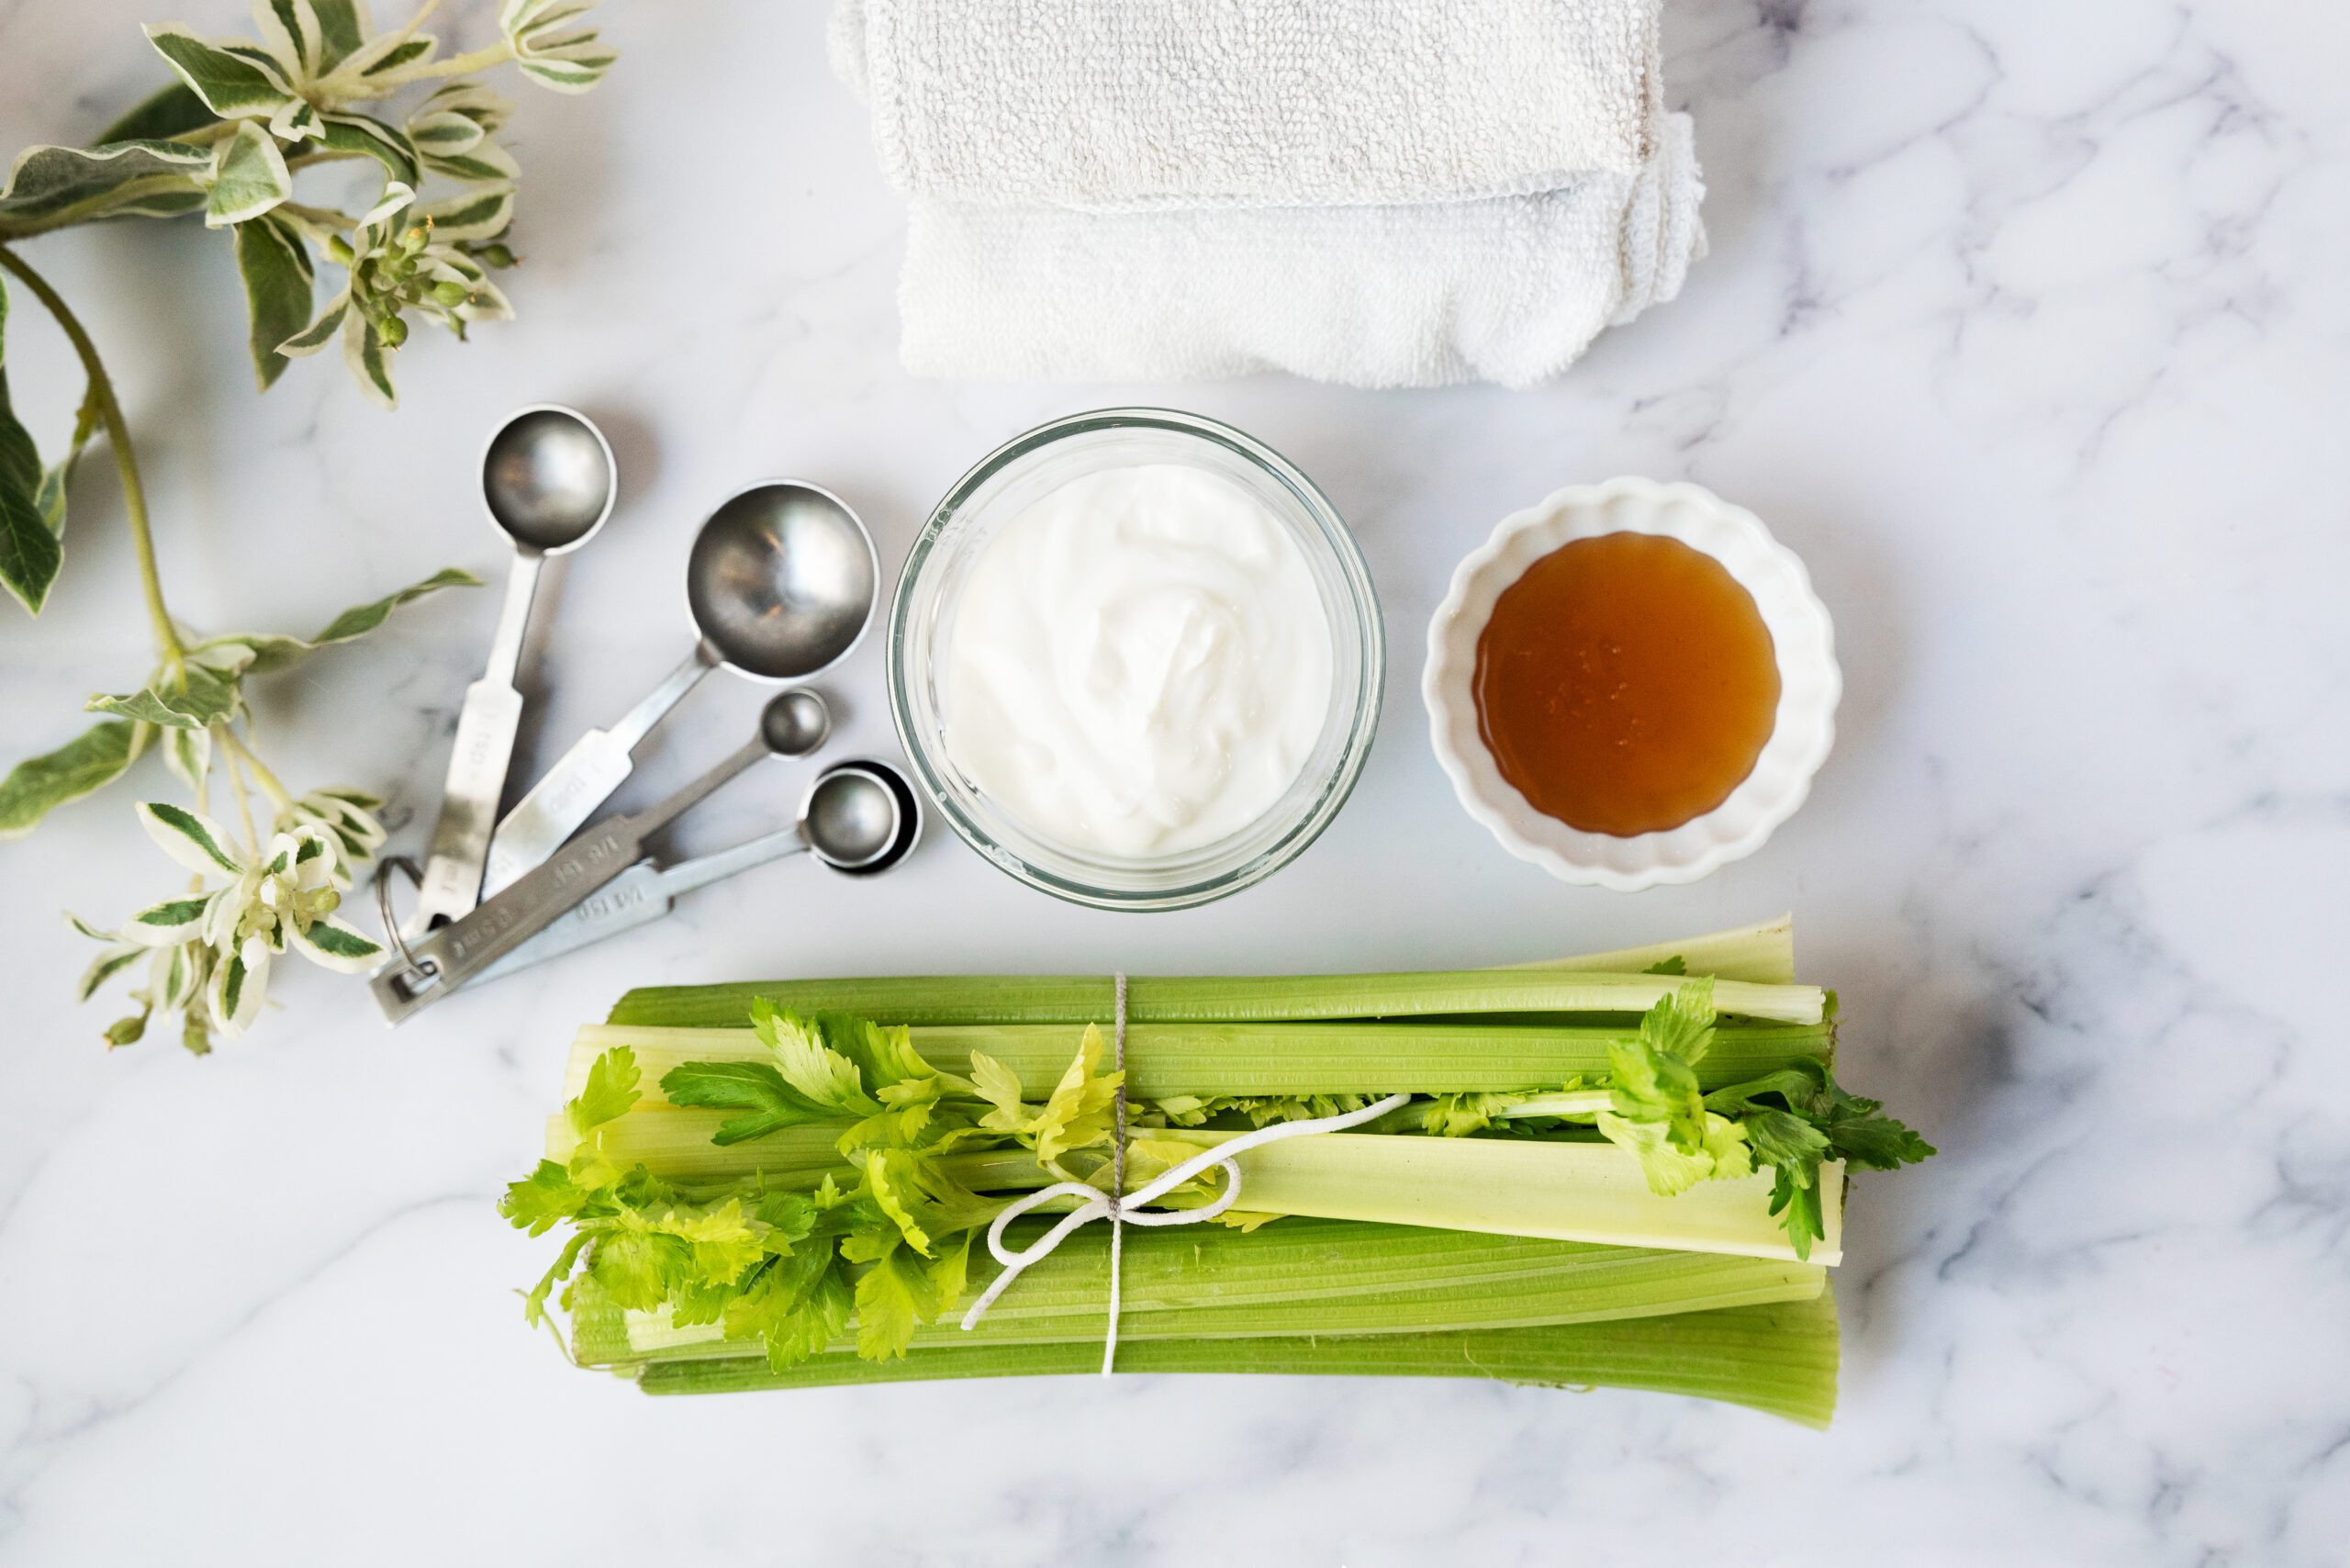 Ingredients for celery mask: celery, yogurt, honey